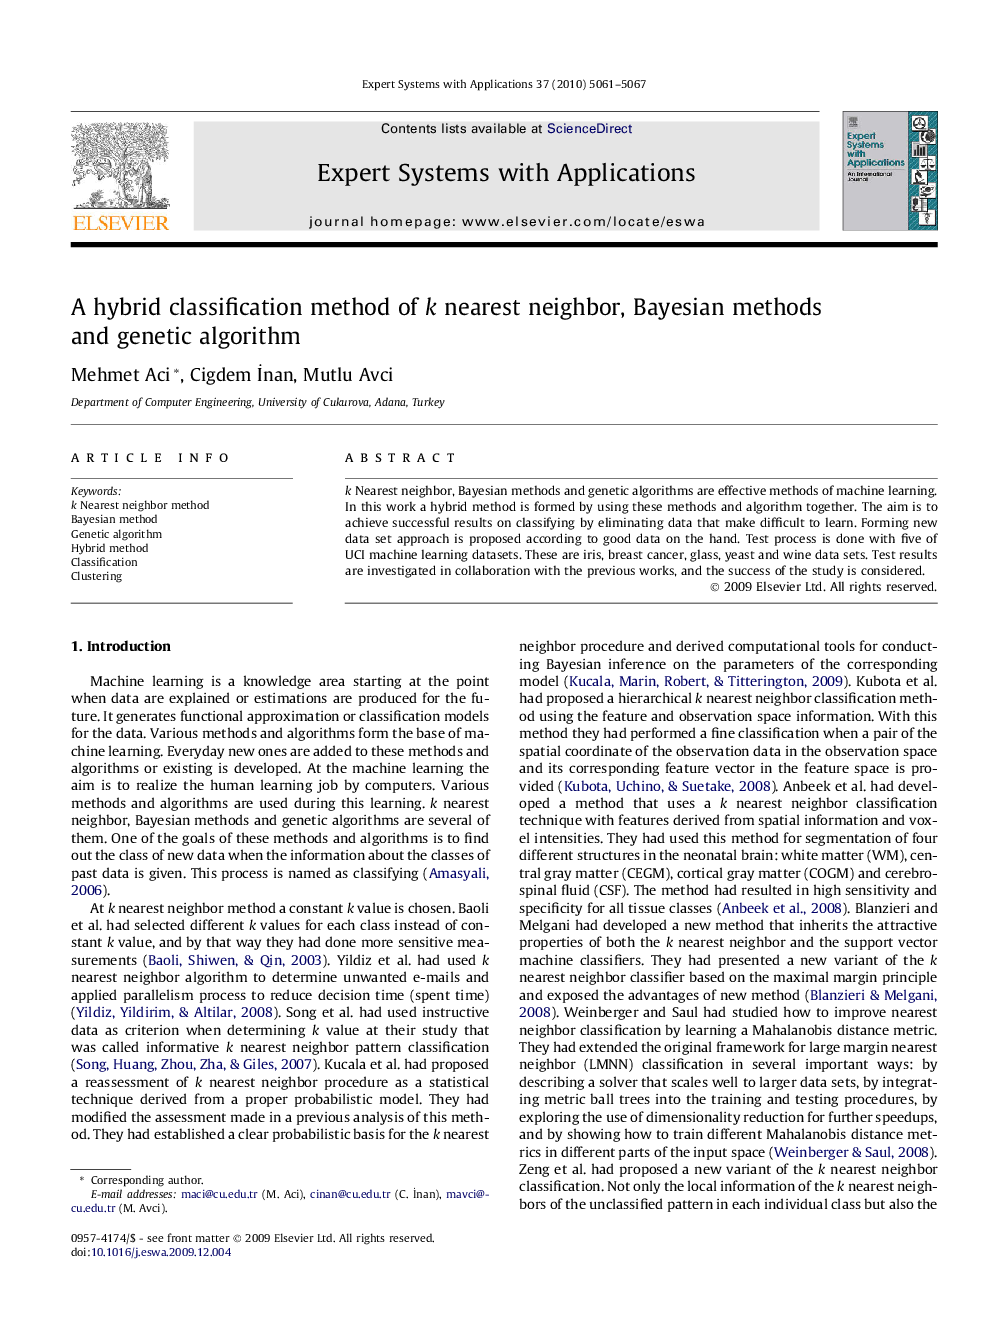 A hybrid classification method of k nearest neighbor, Bayesian methods and genetic algorithm